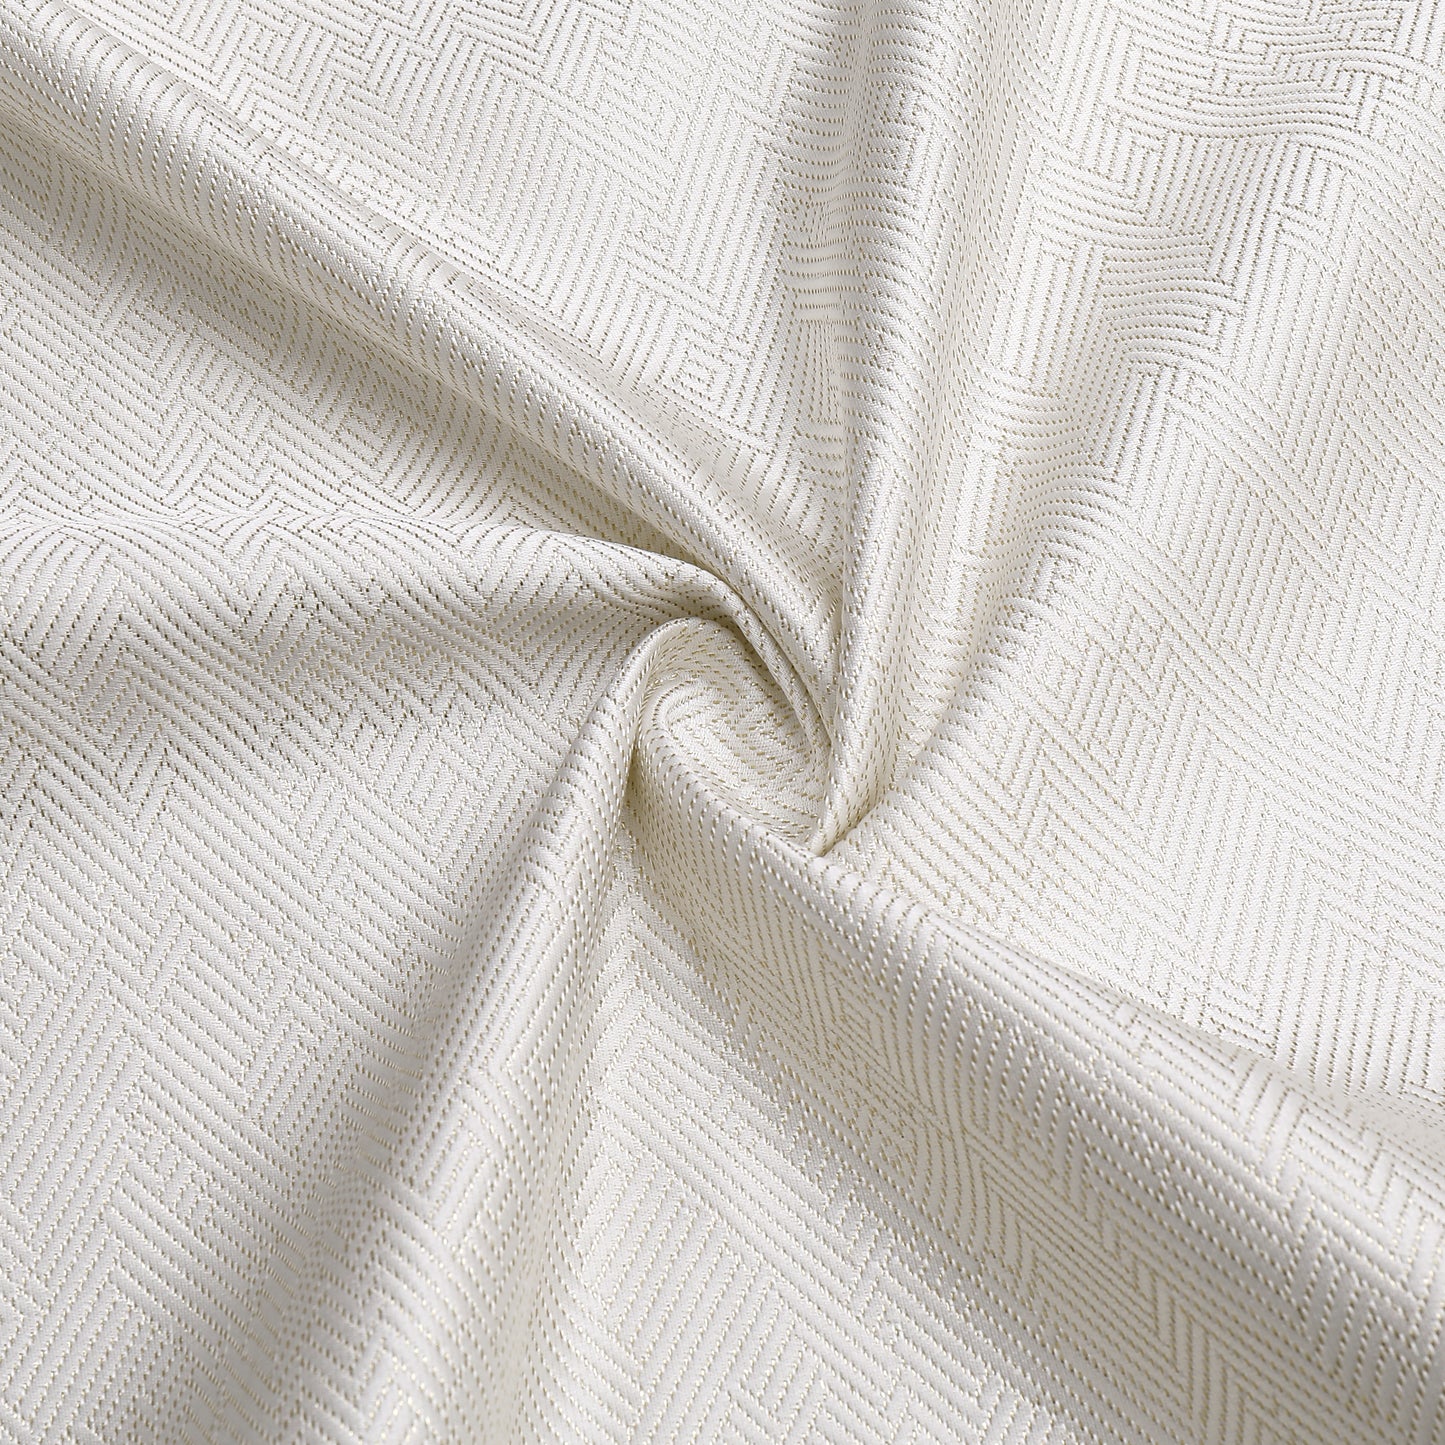 White/Gold Desert Jacquard Tablecloth #1336